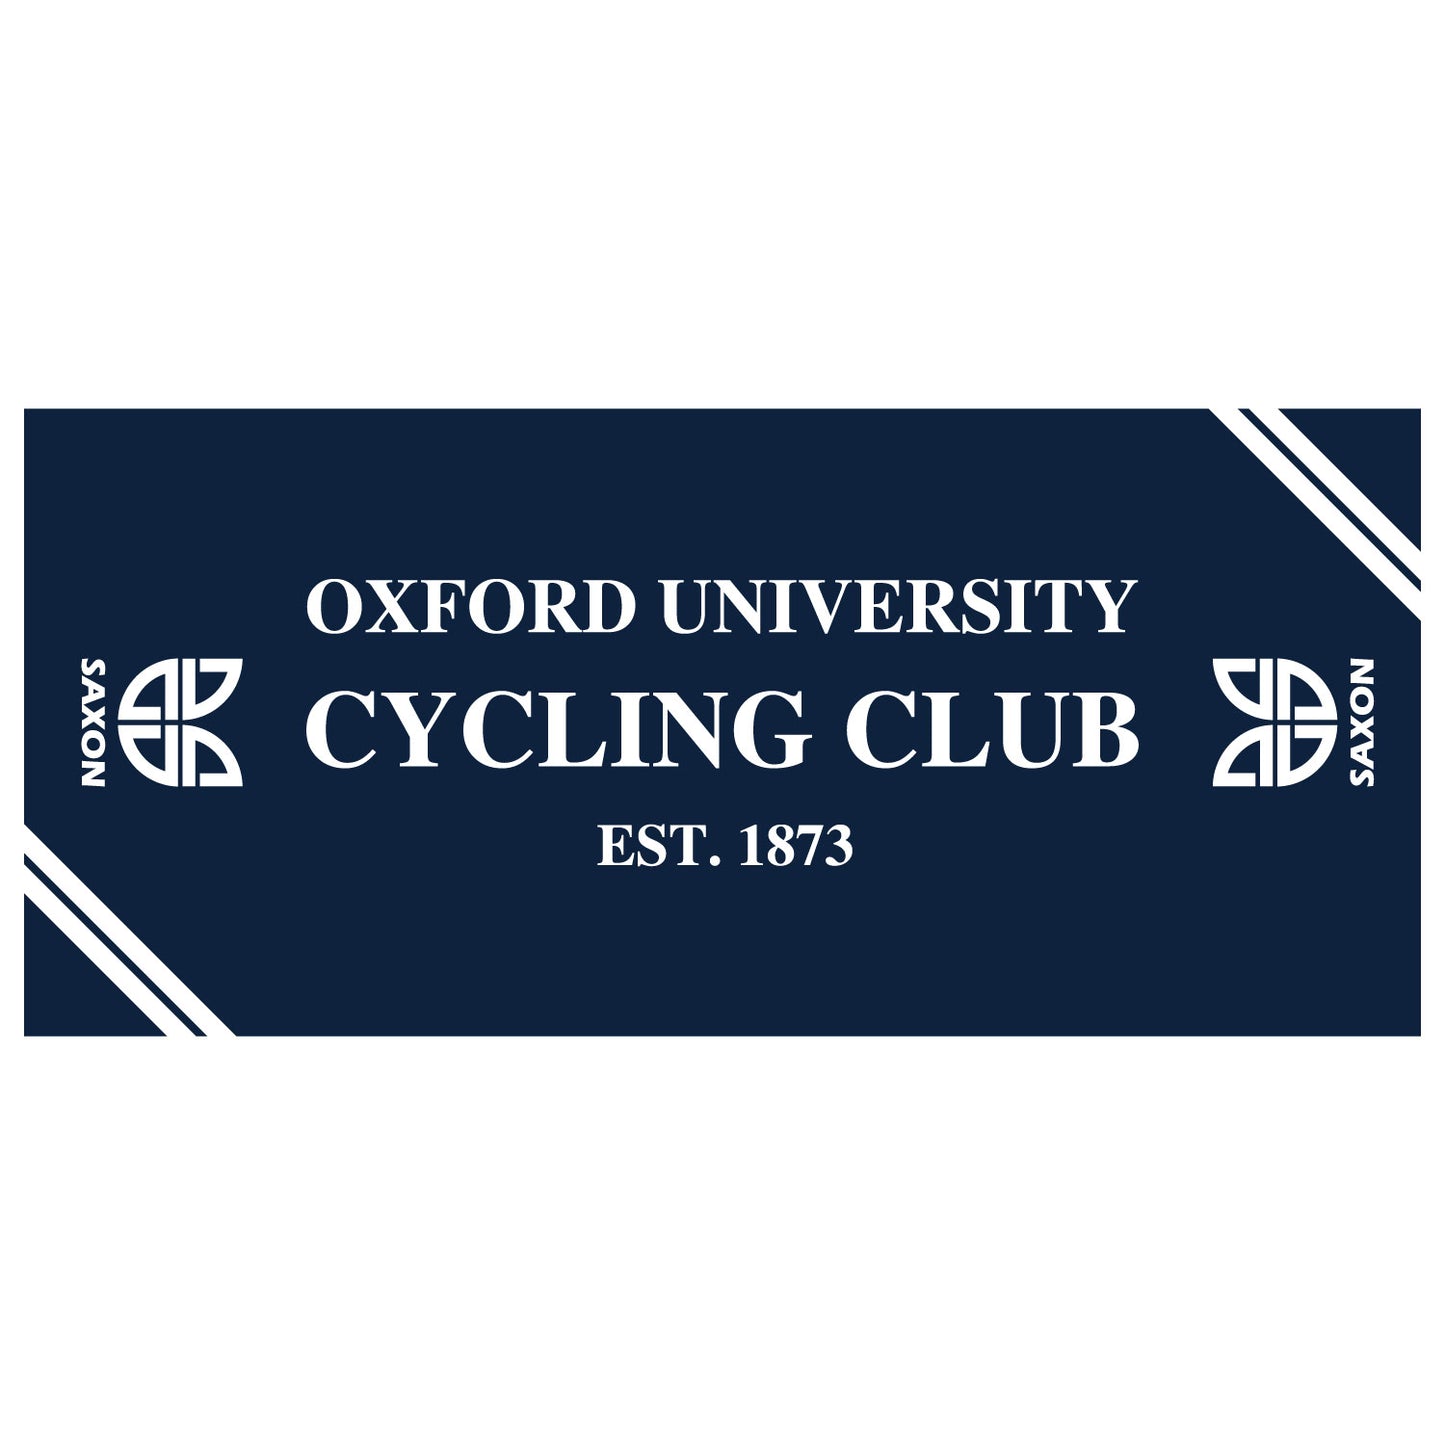 Oxford University Cycling Club Stripes Towel